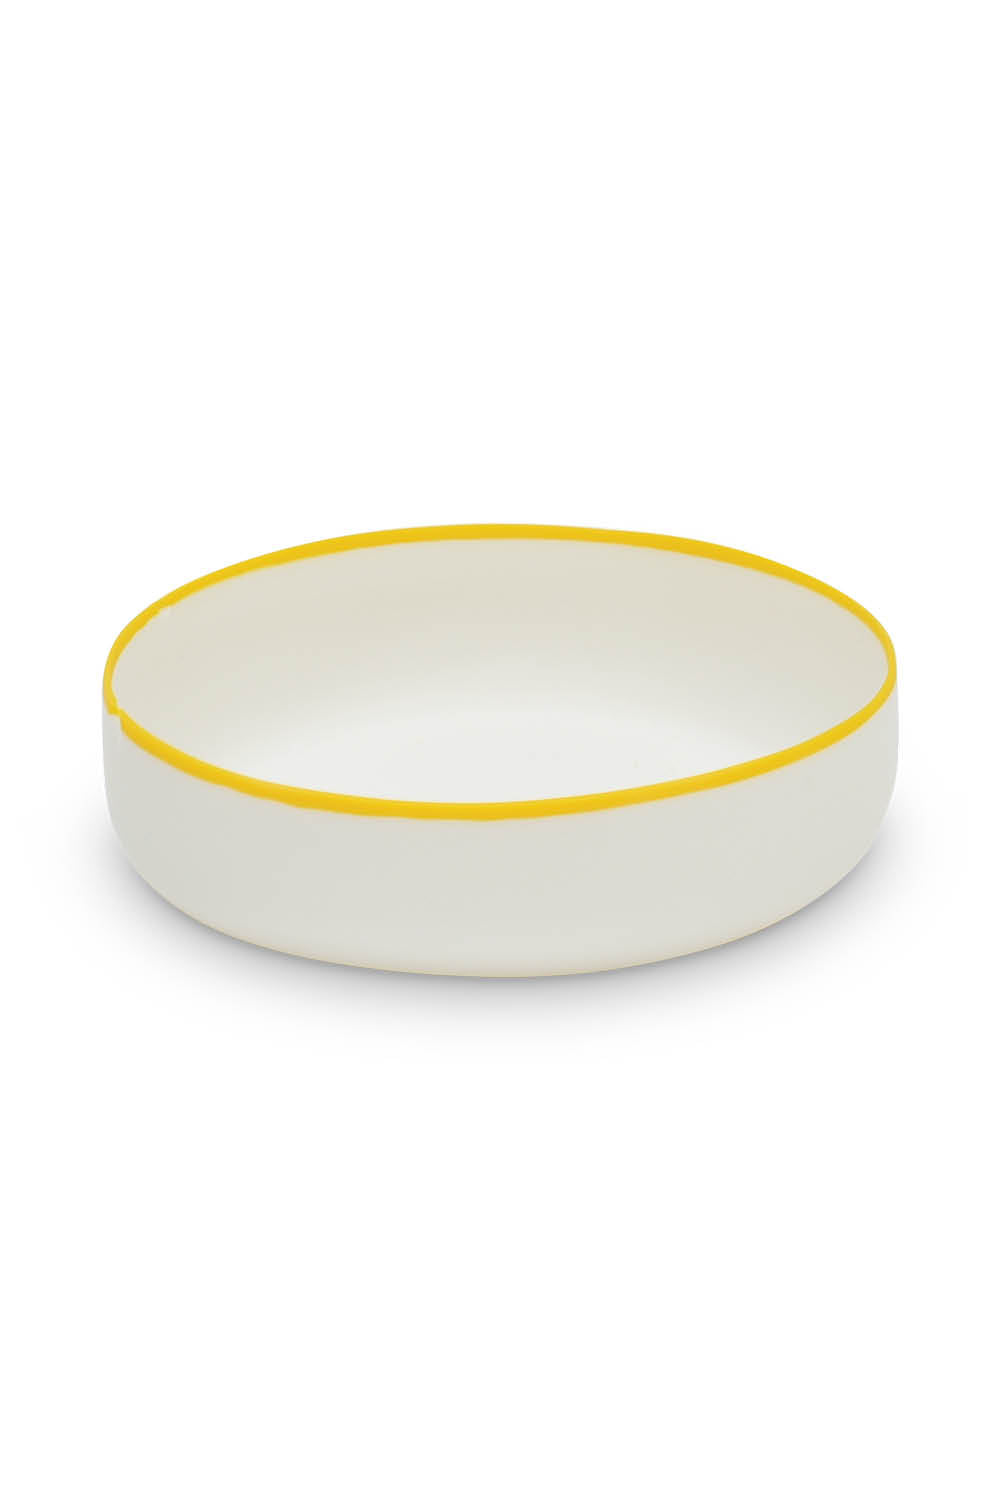 LIGNE Large Bowl in White With Sunshine Yellow Rim